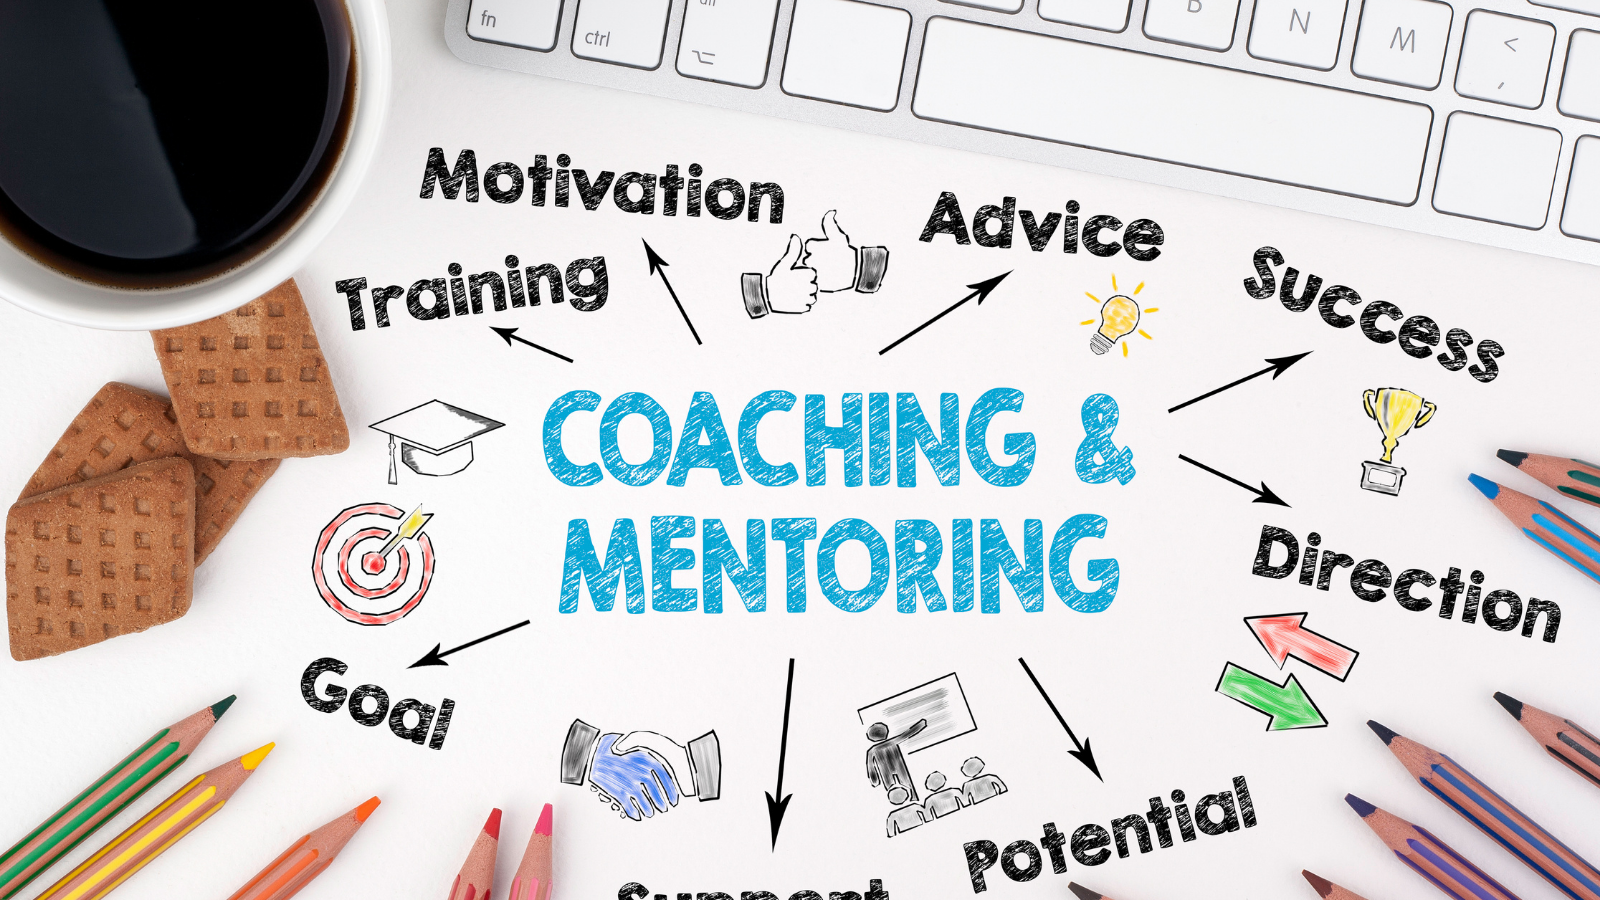 Stratford på Avon svejsning uudgrundelig Coaching and Mentoring: What's the Difference?